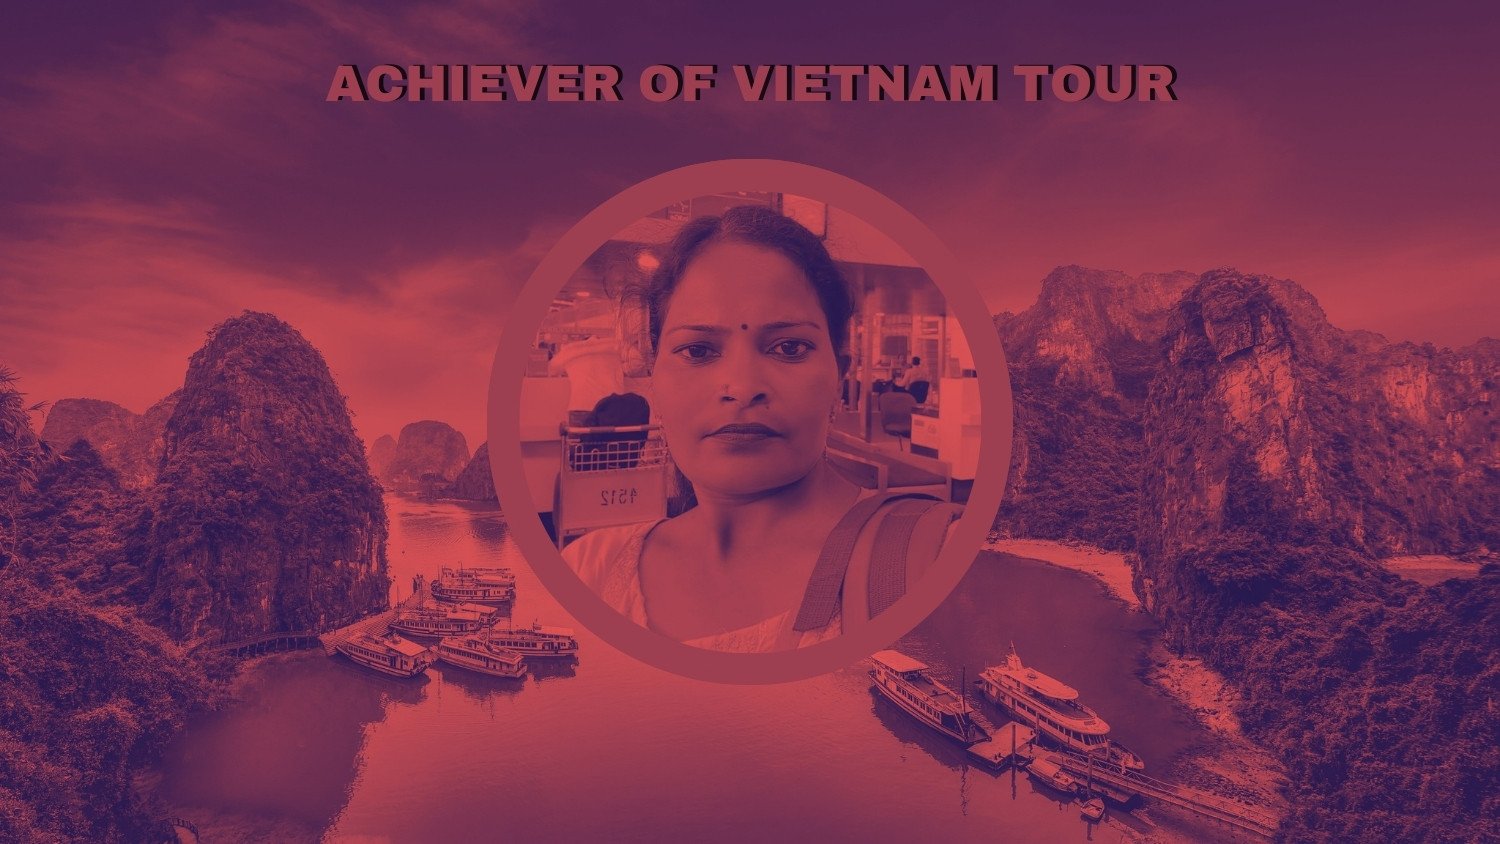 Rubywebcast-Renu Bala Shining Bright on Ruby Assets Vietnam Tour Achievement